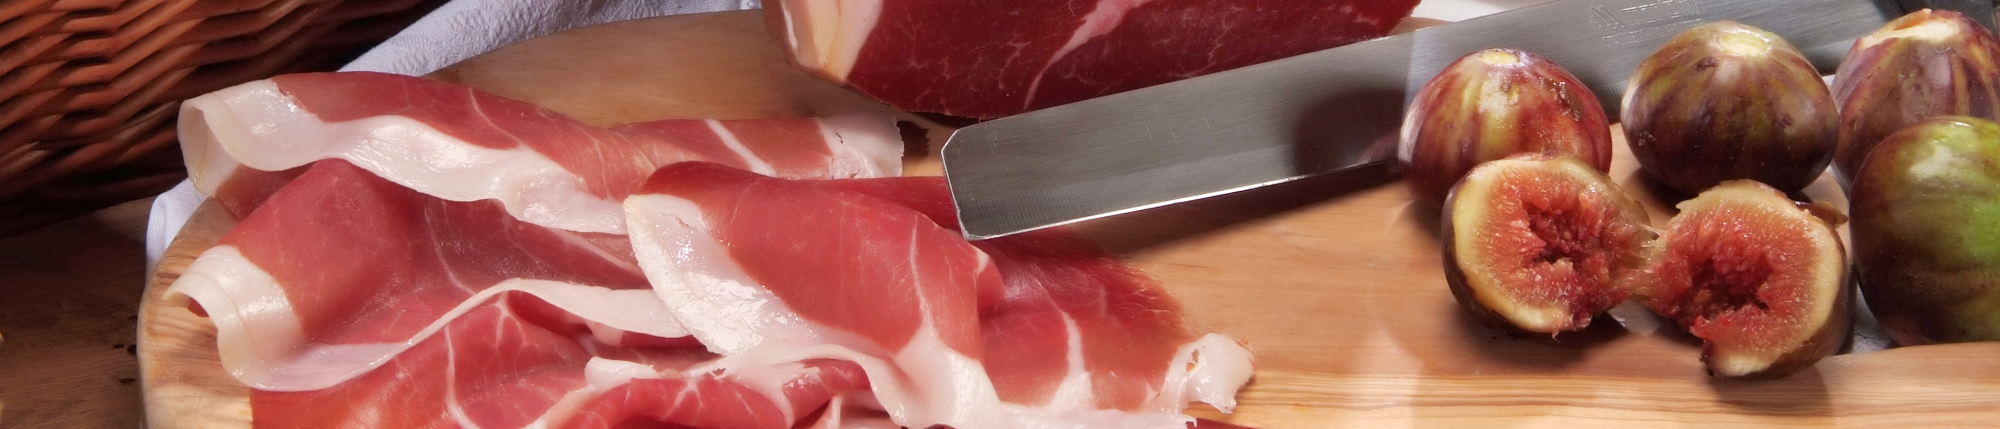 Culatello di Zibello and Cured Meats from Parma (Italy) - ParmaShop.com